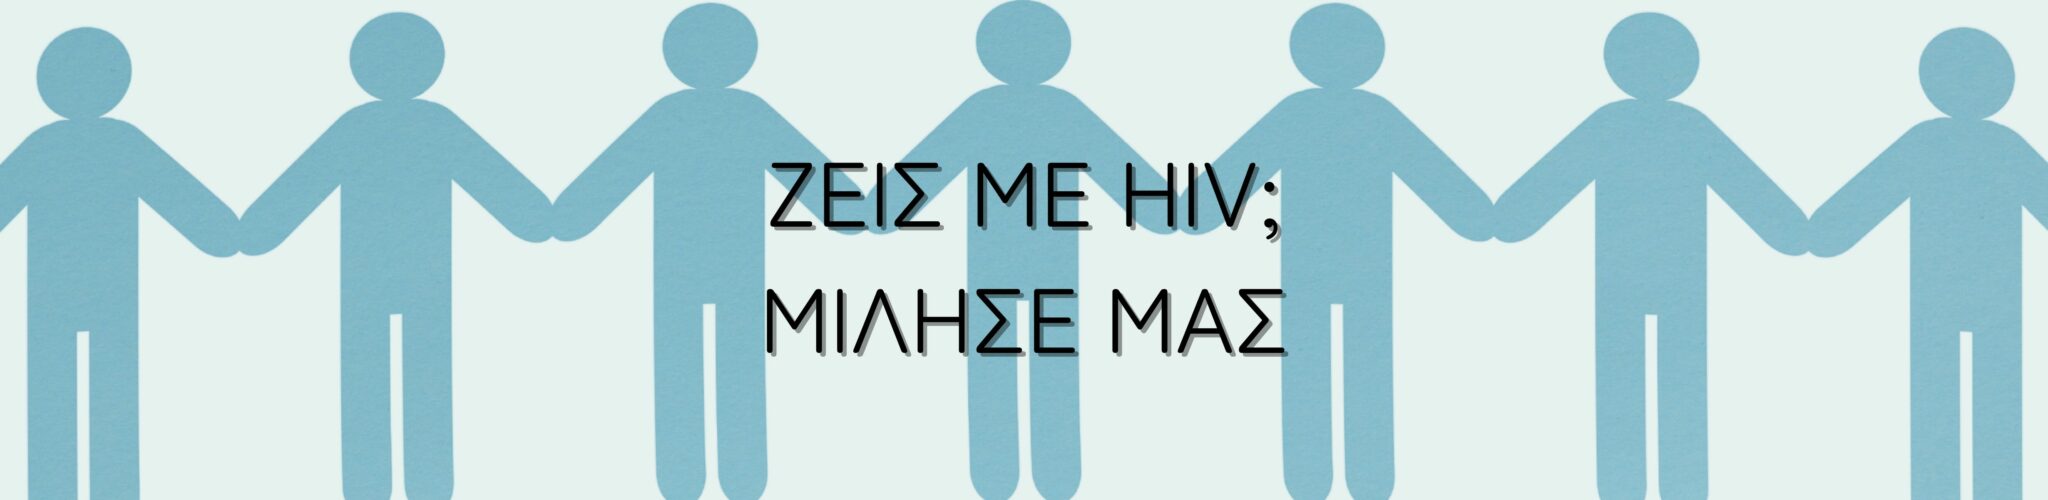 Featured image for “Ζεις με HIV; Μίλησε μαζί μας!”